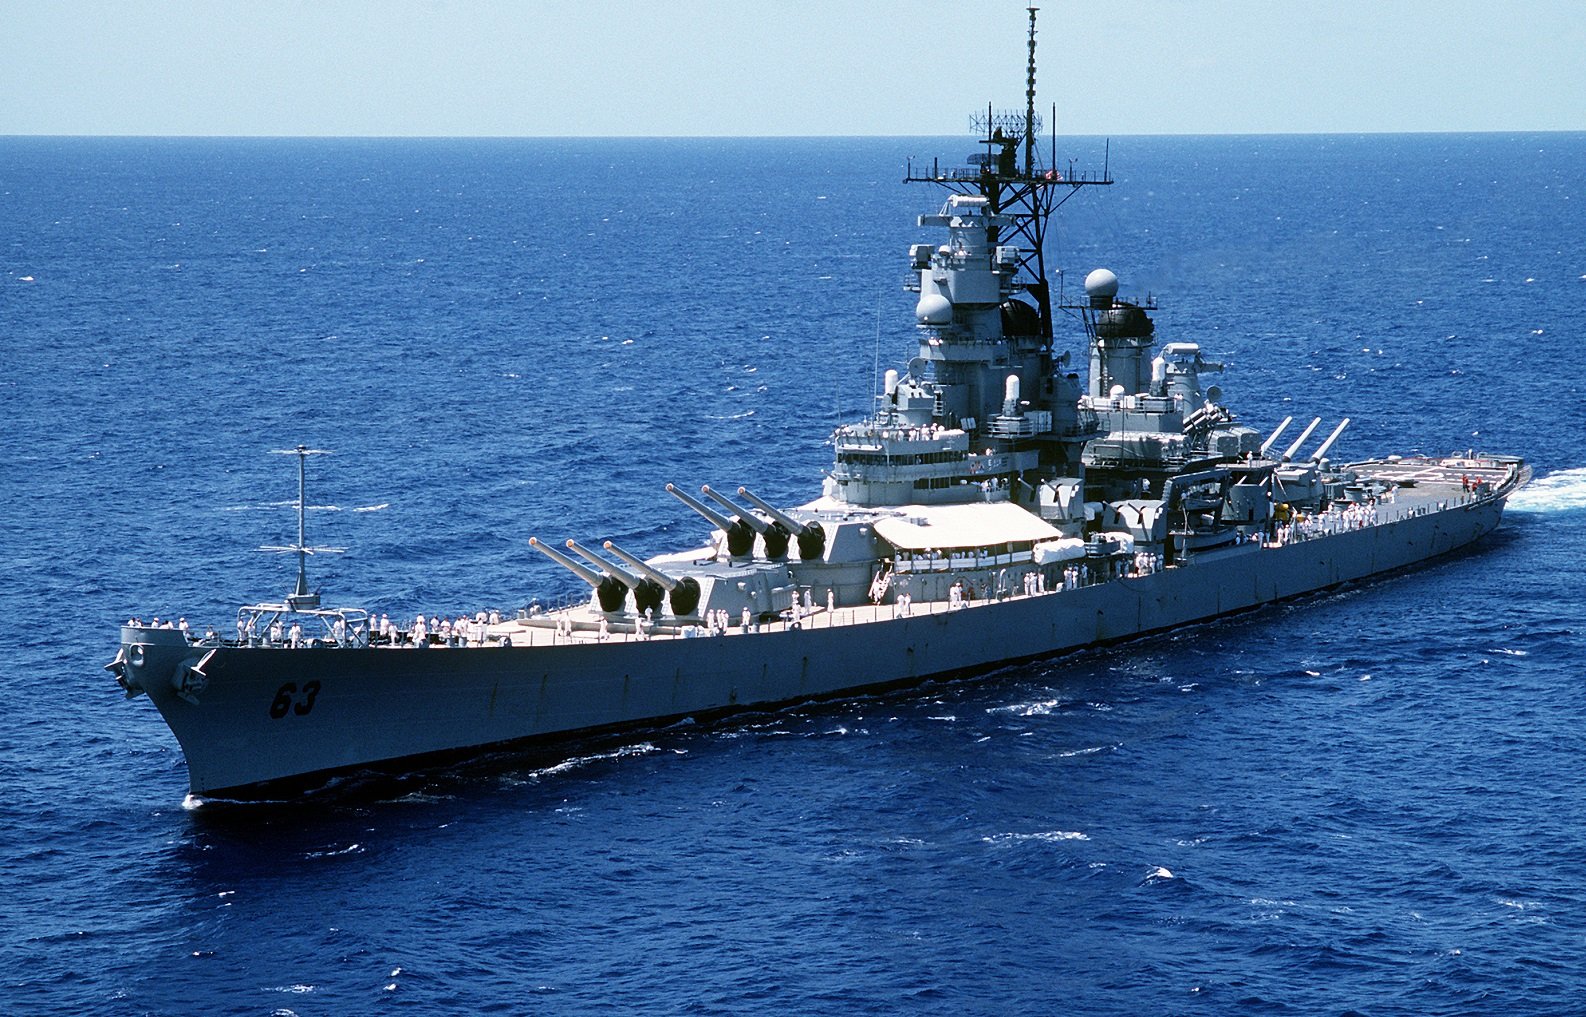 iowa battleship world of warships